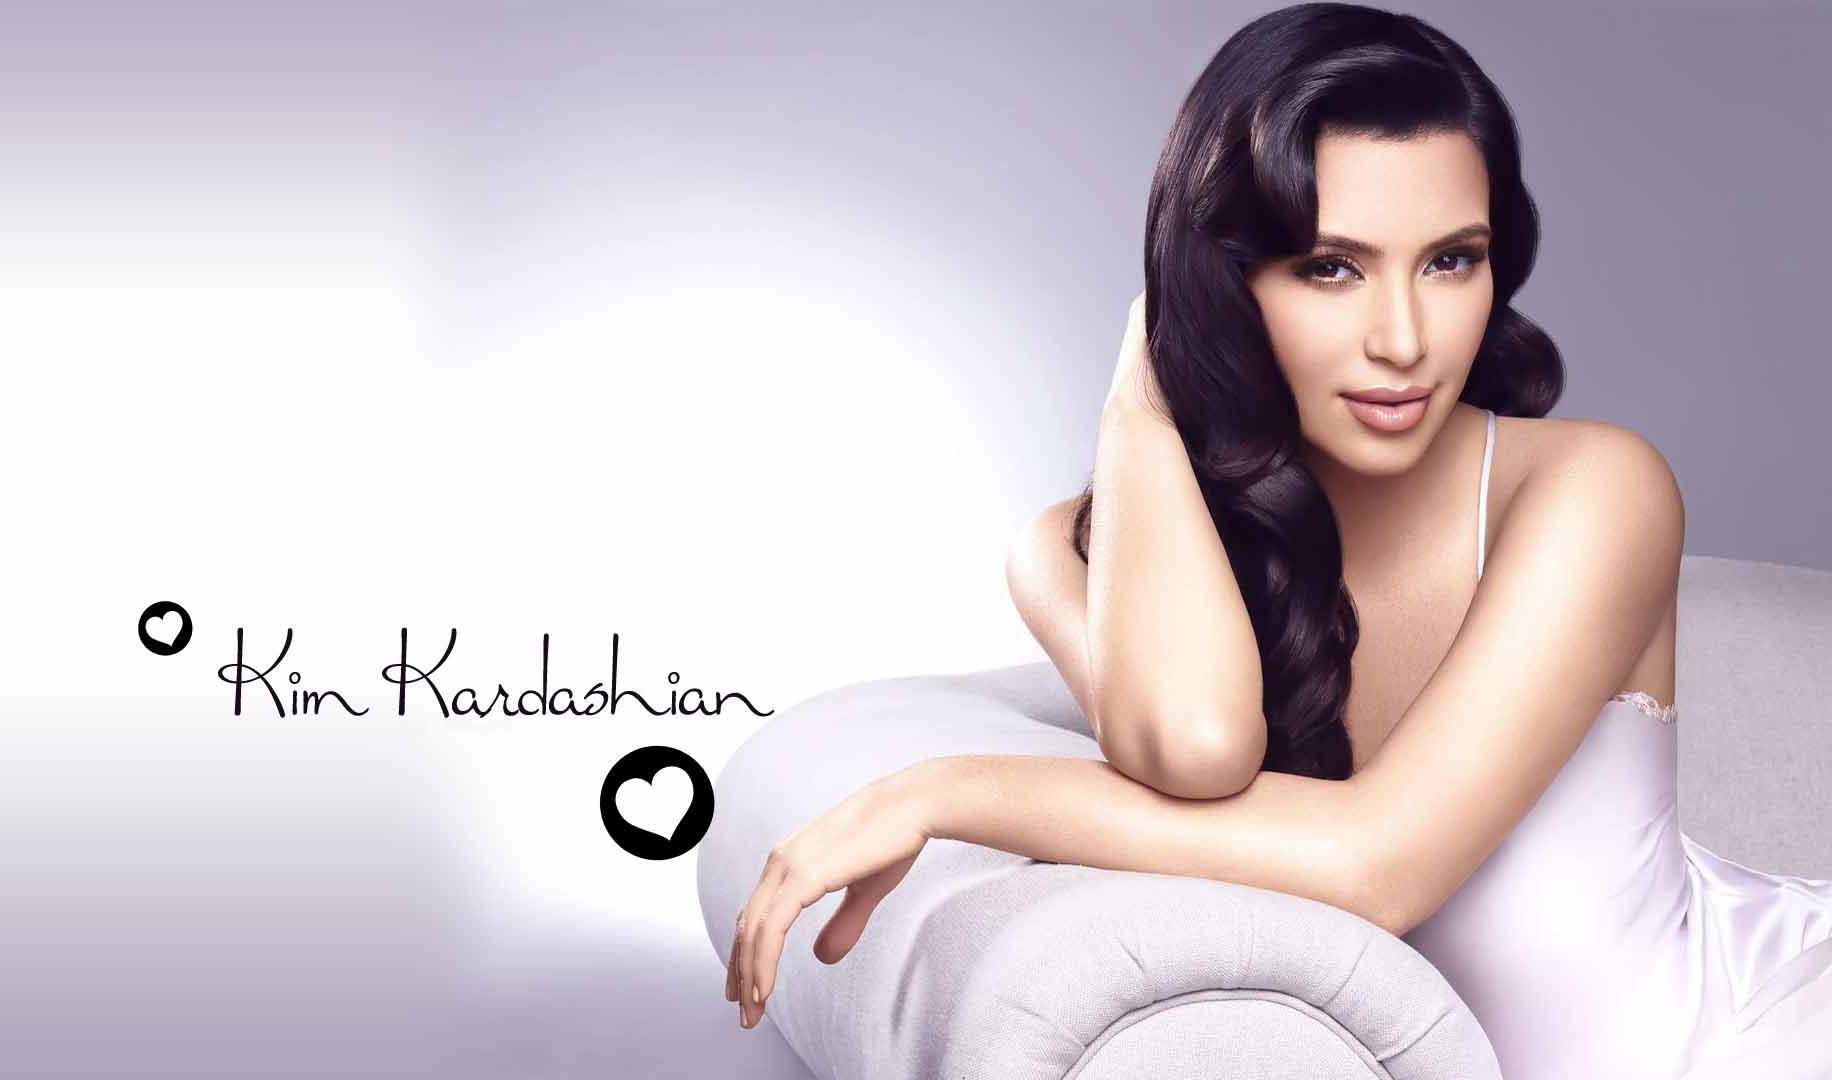 Kim Kardashian Attractive Pictures Full HD